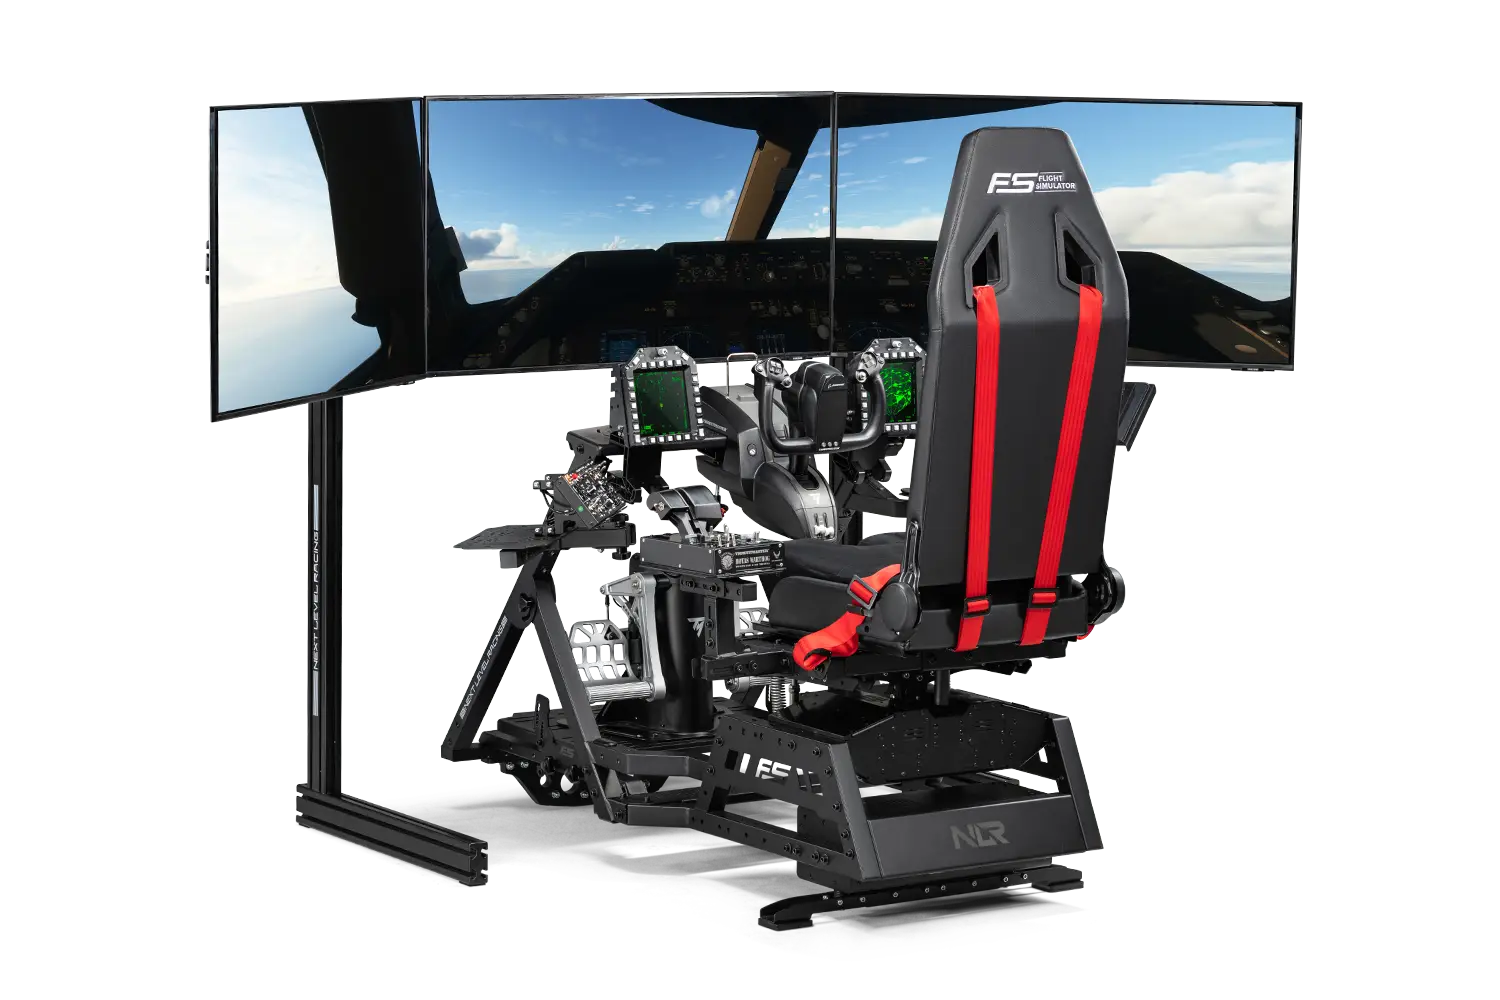 Next Level Racing - Flight Simulator - FlightsimWebshop